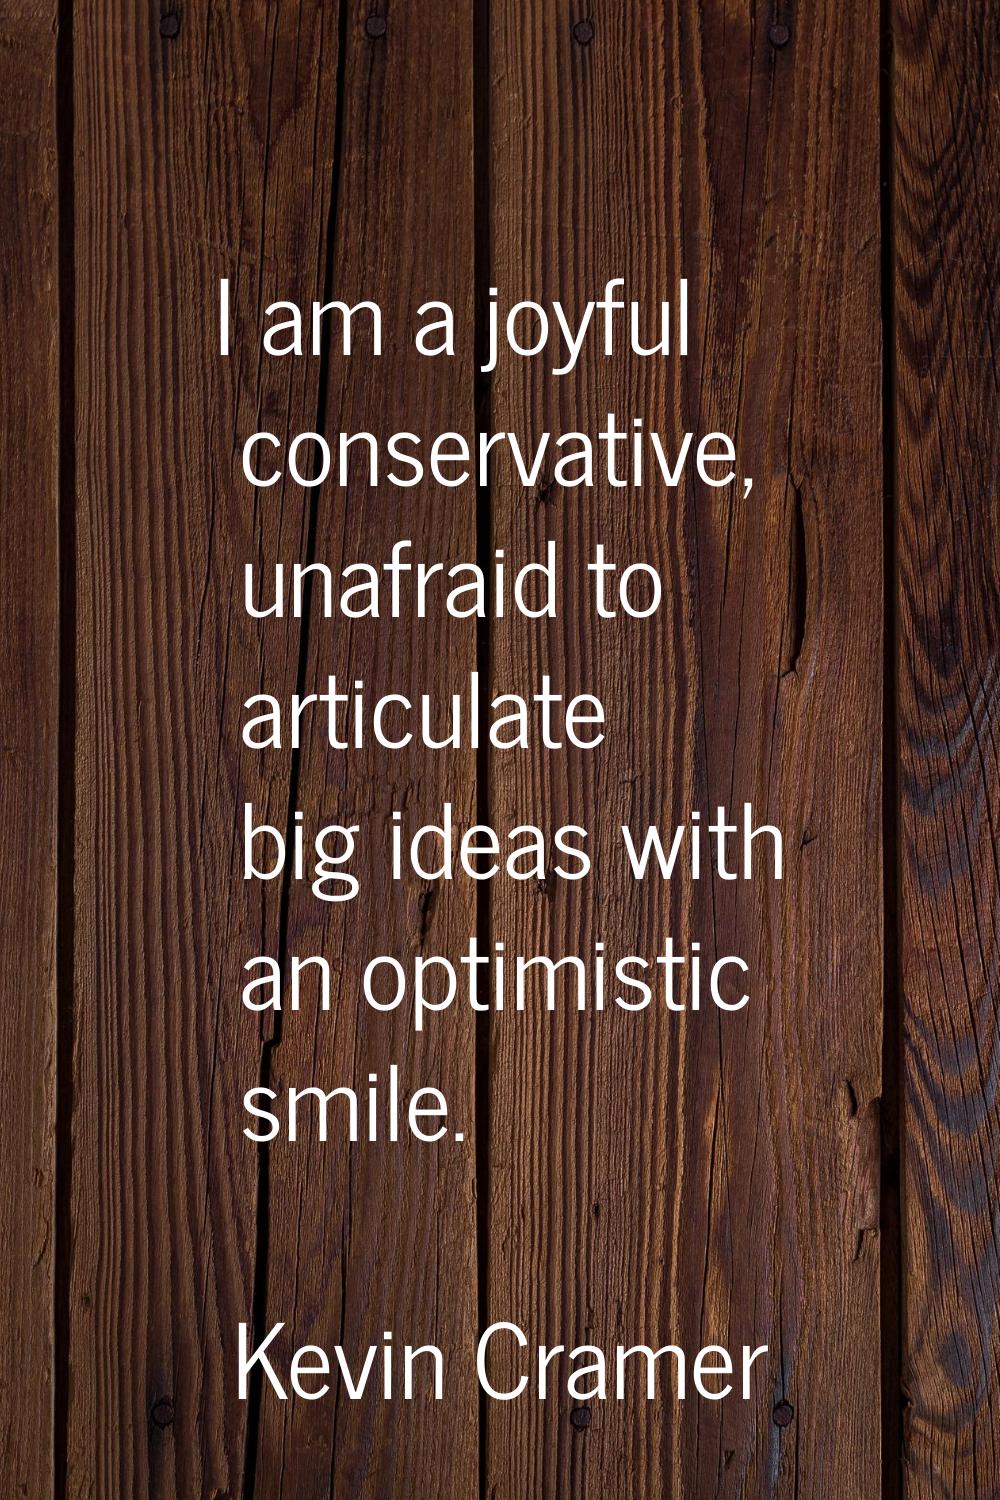 I am a joyful conservative, unafraid to articulate big ideas with an optimistic smile.